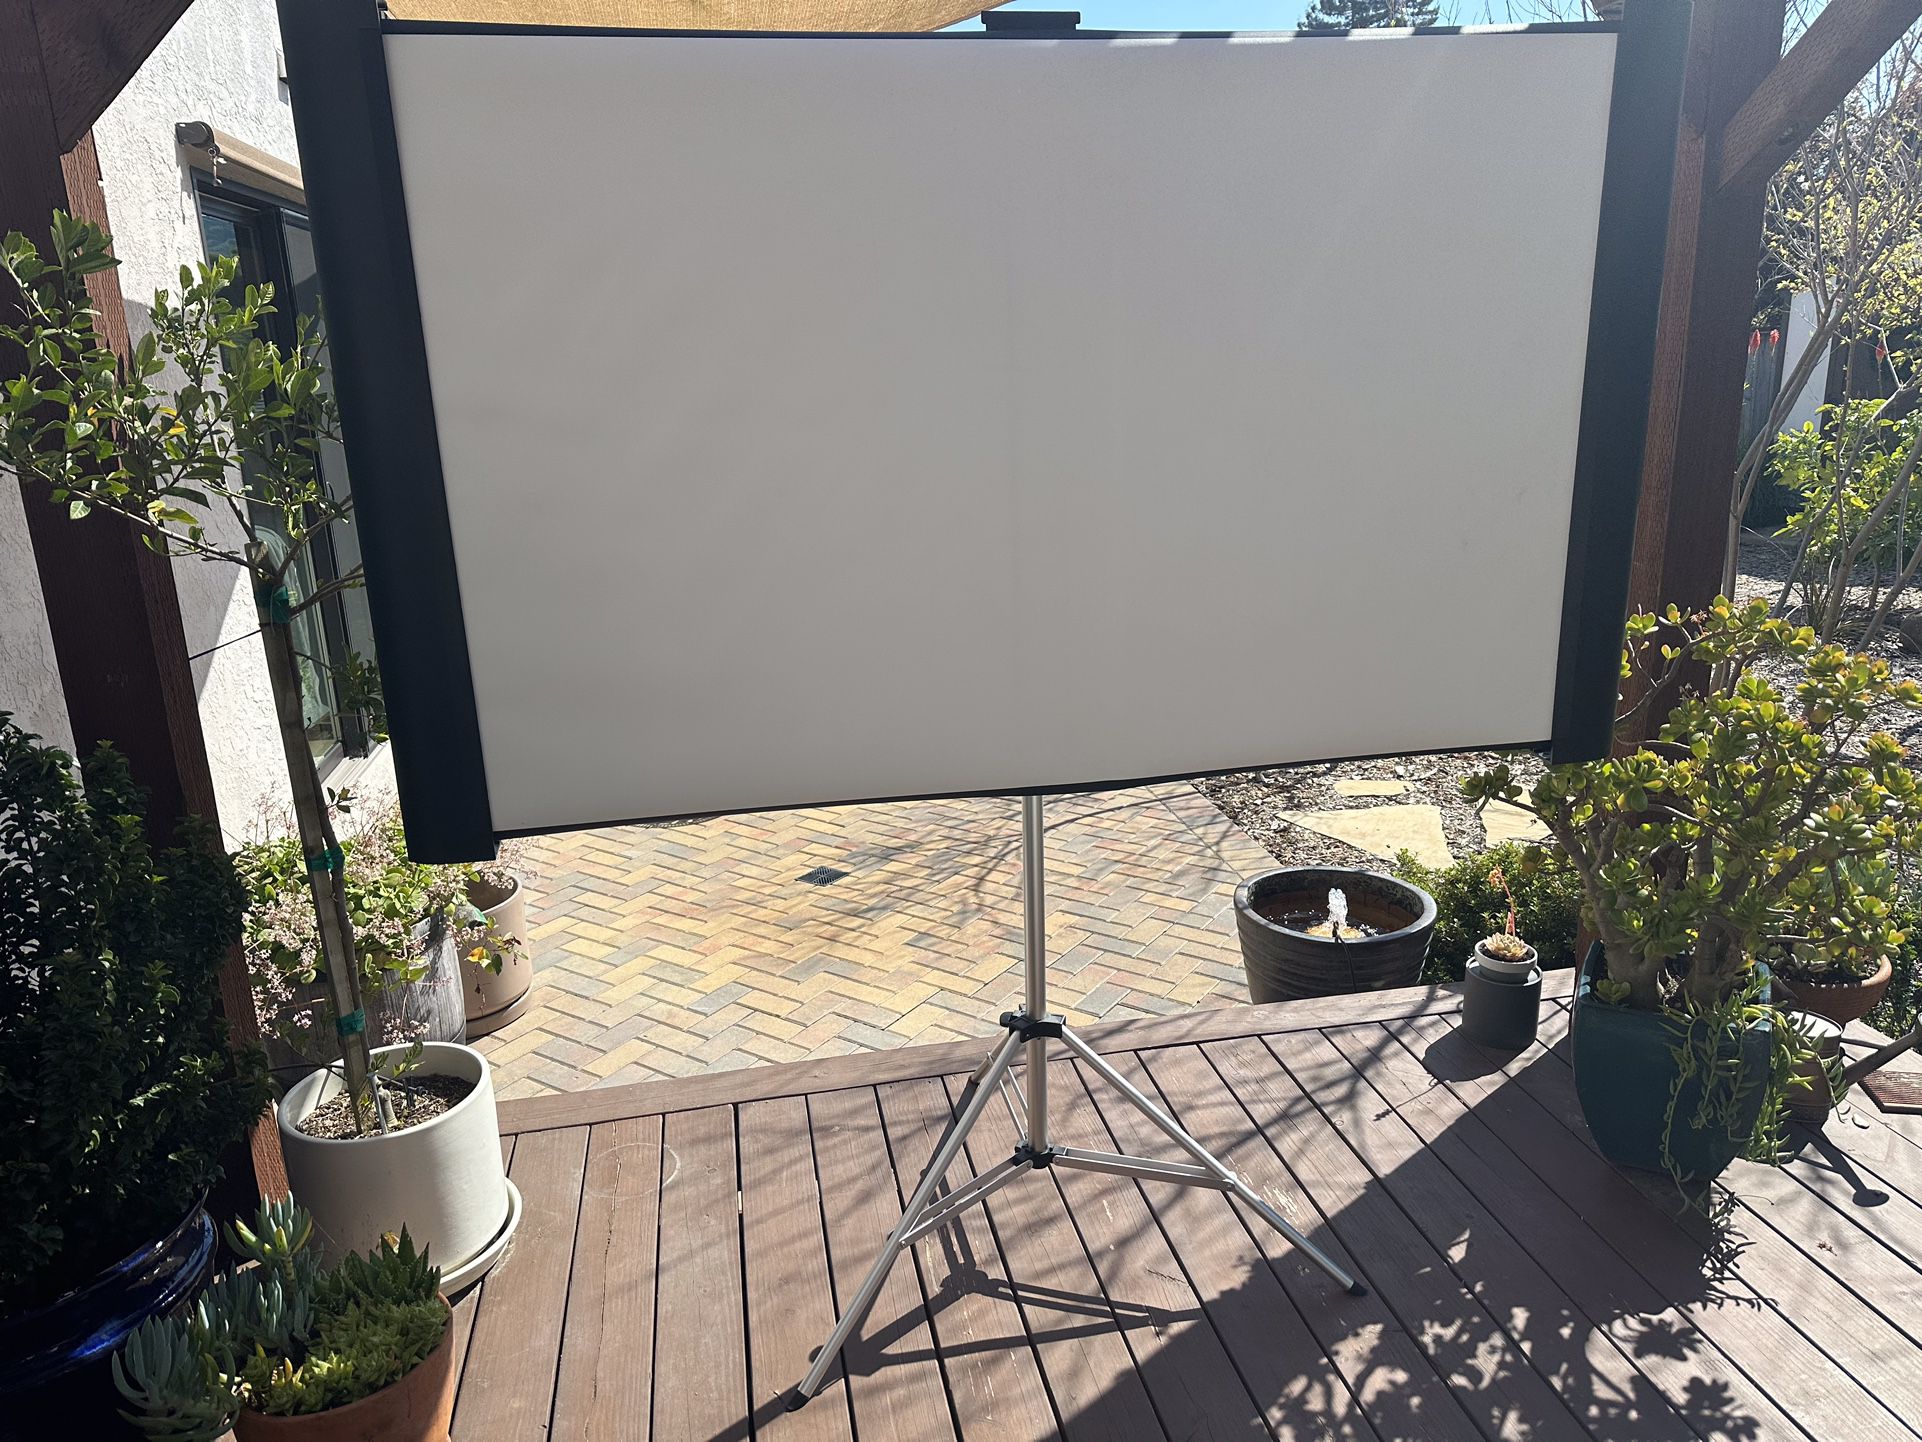 Portable Projector Screen